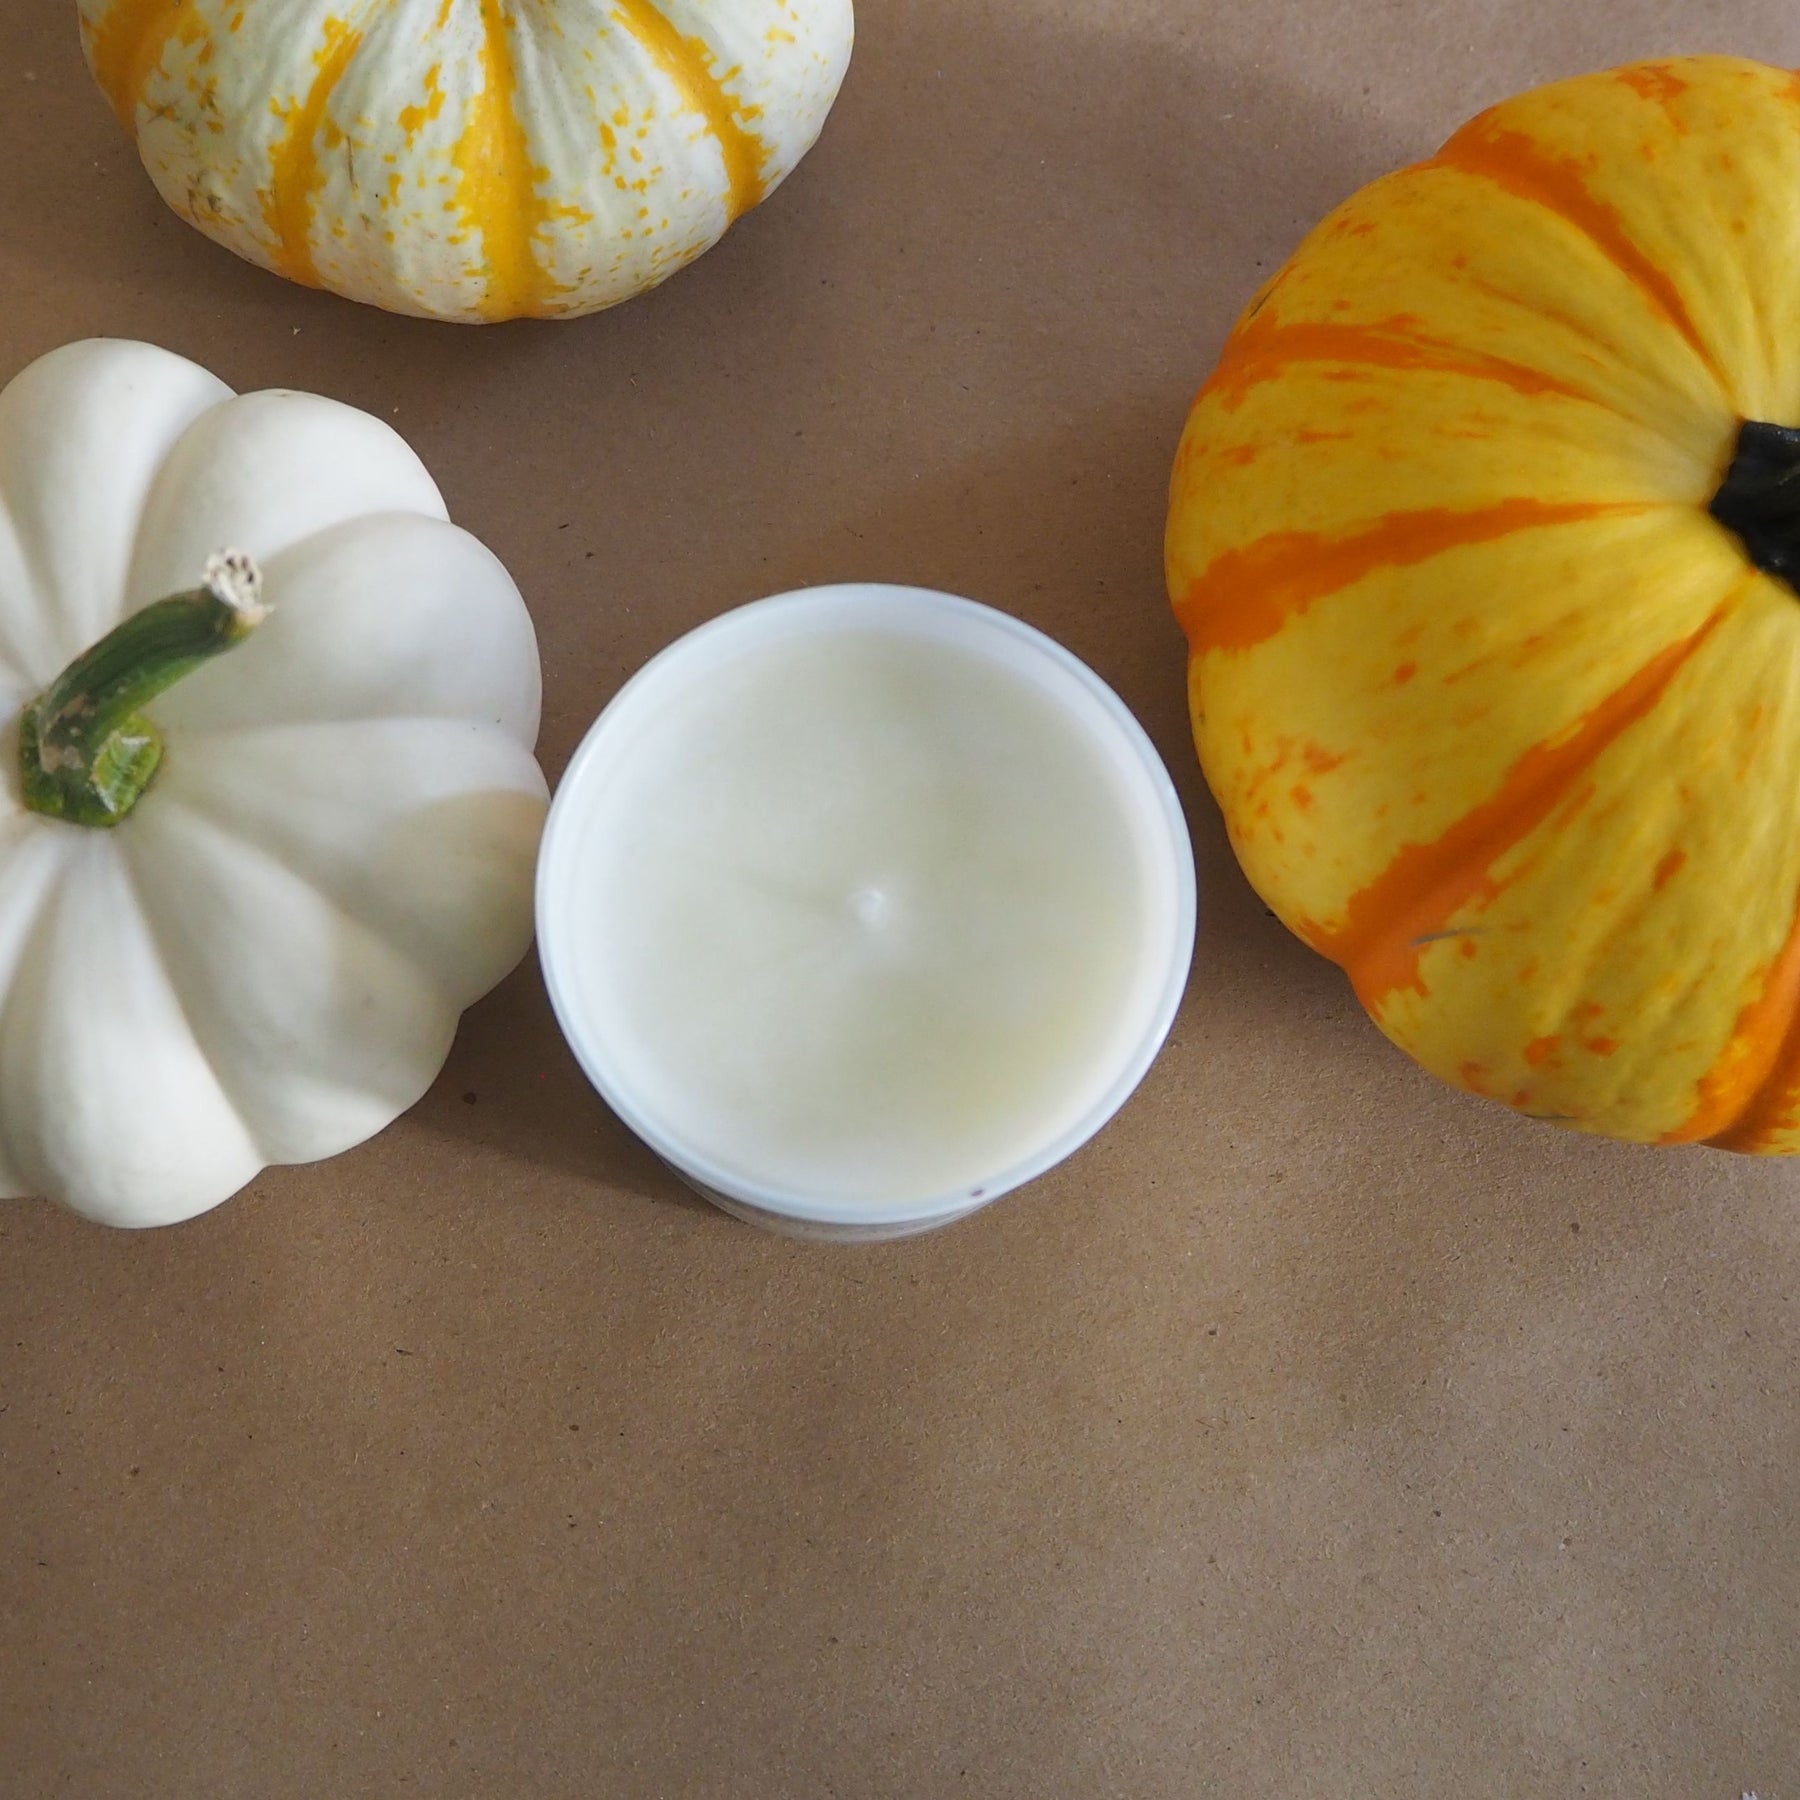 Vanilla Pumpkin Marshmallow Fragrance Oil, 10 ml Premium, Long Lasting –  Eclectic Lady